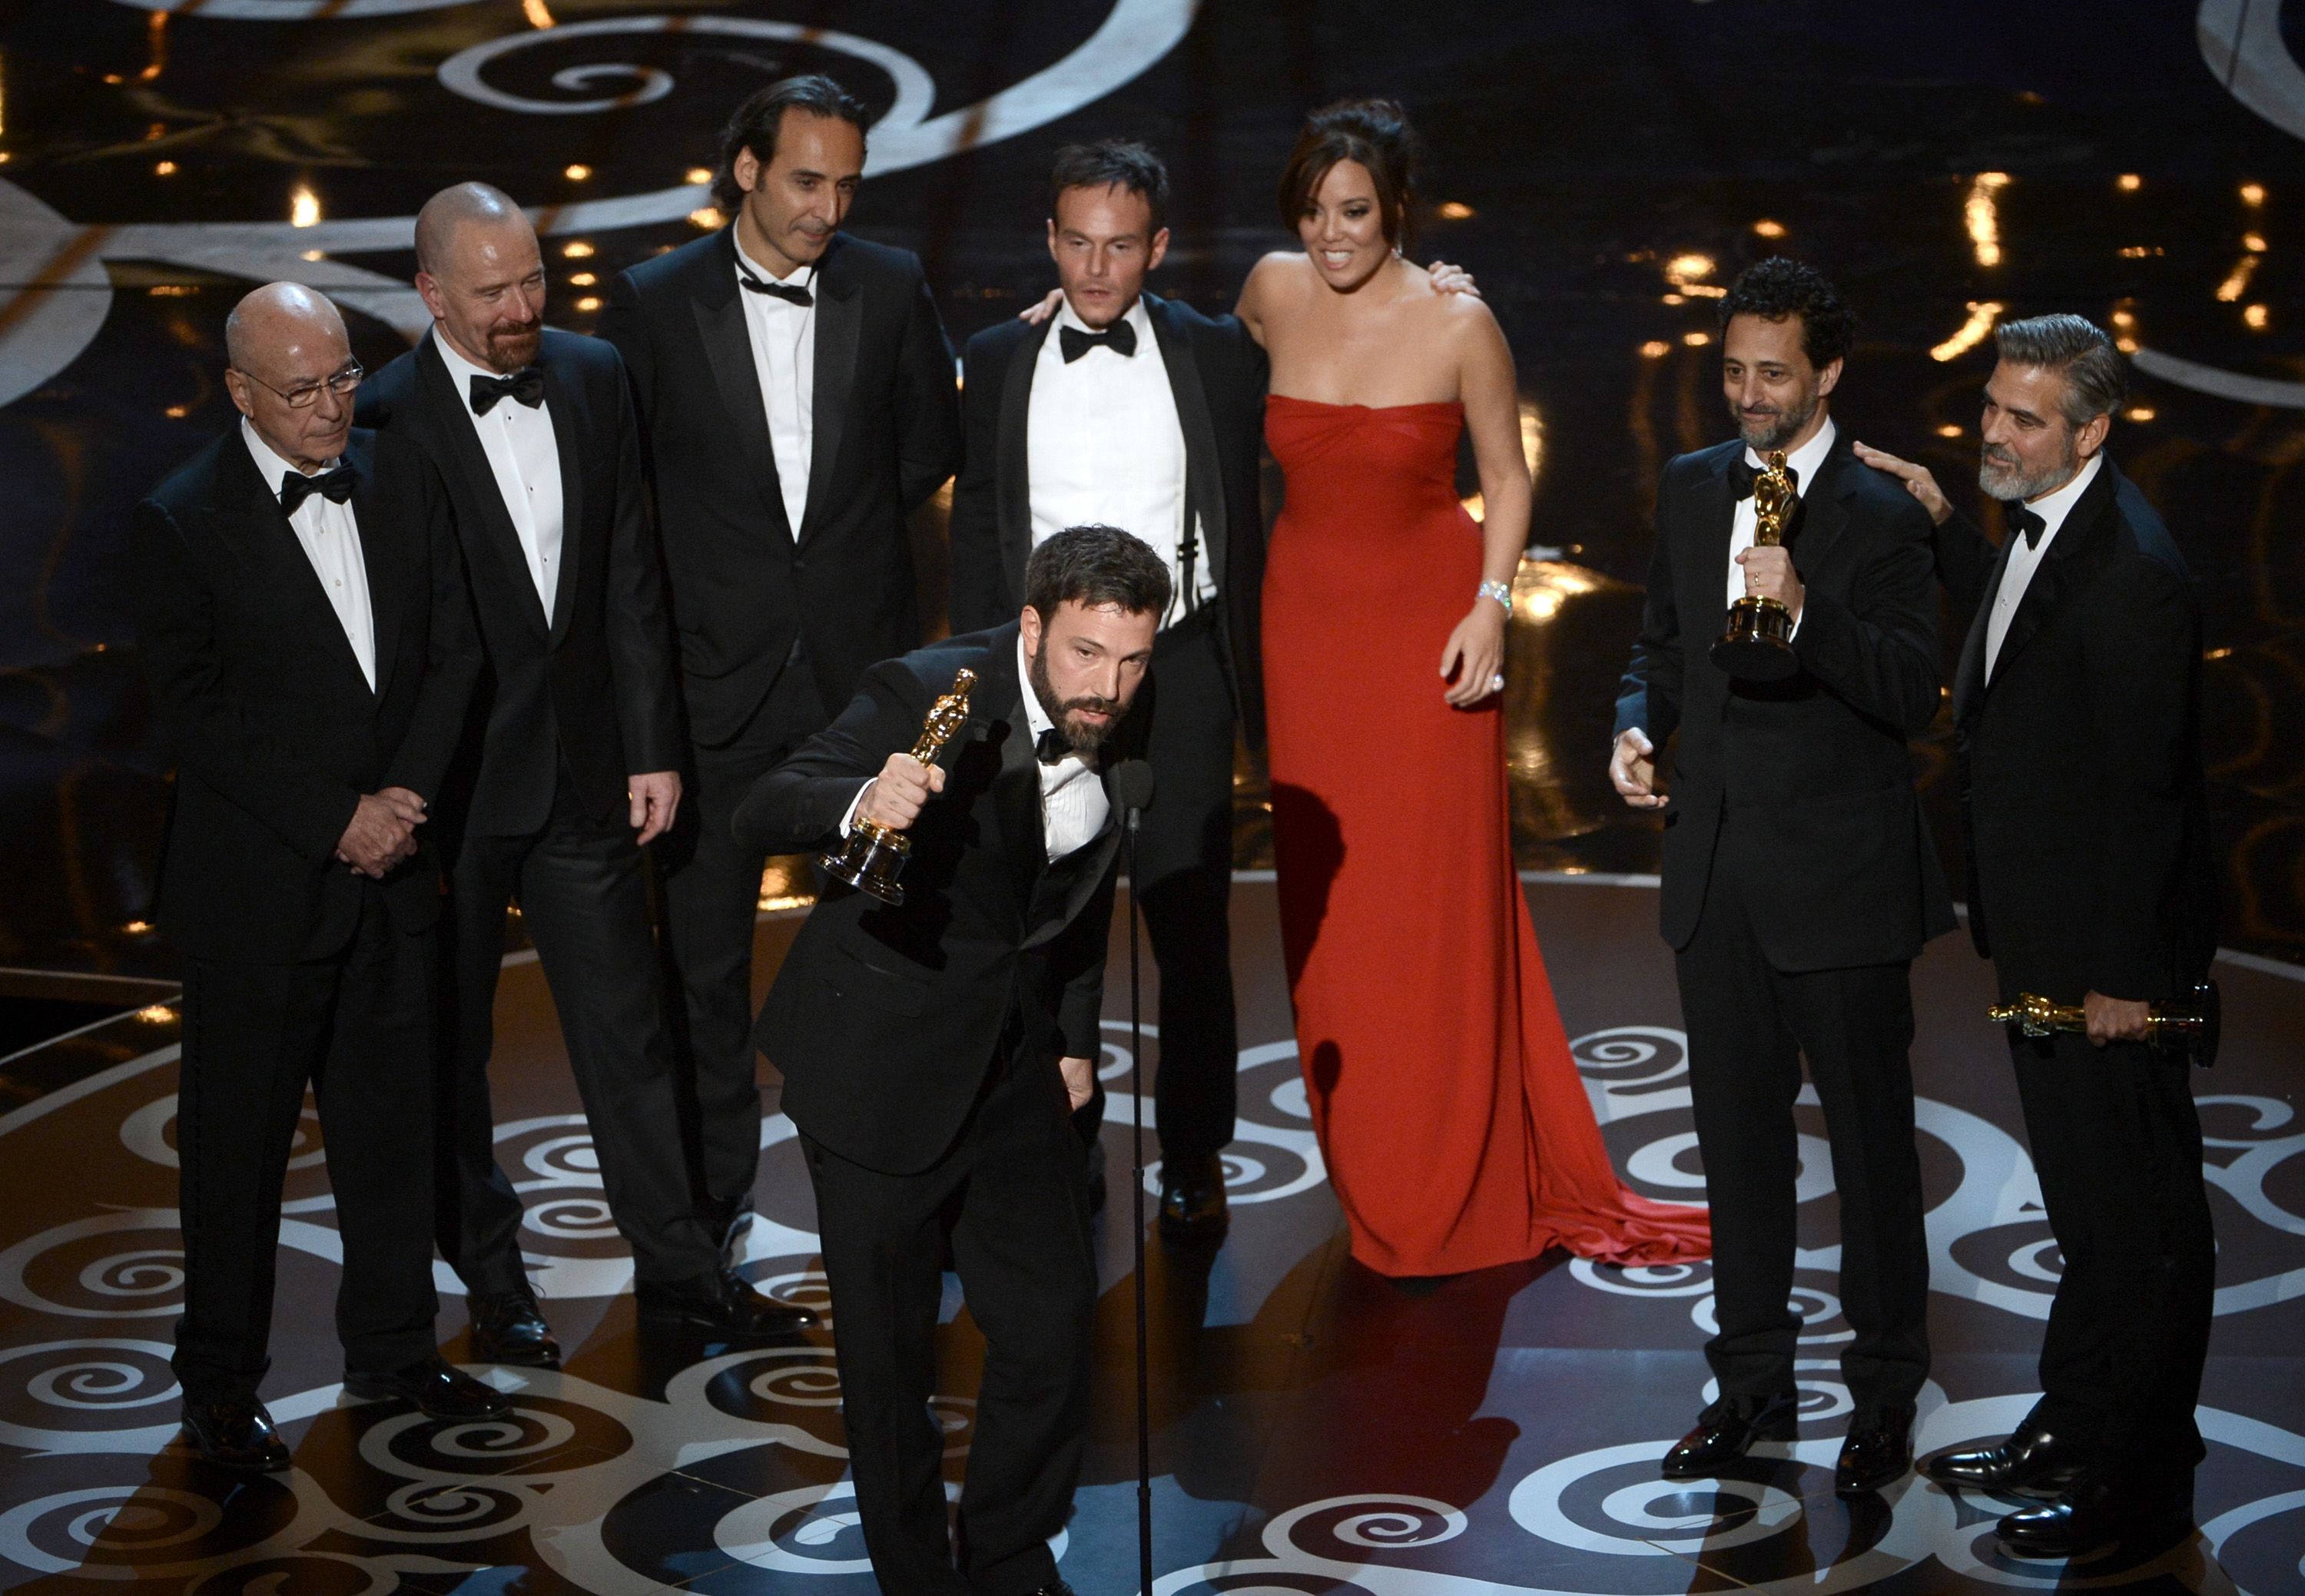 85th Academy Awards - Wikipedia